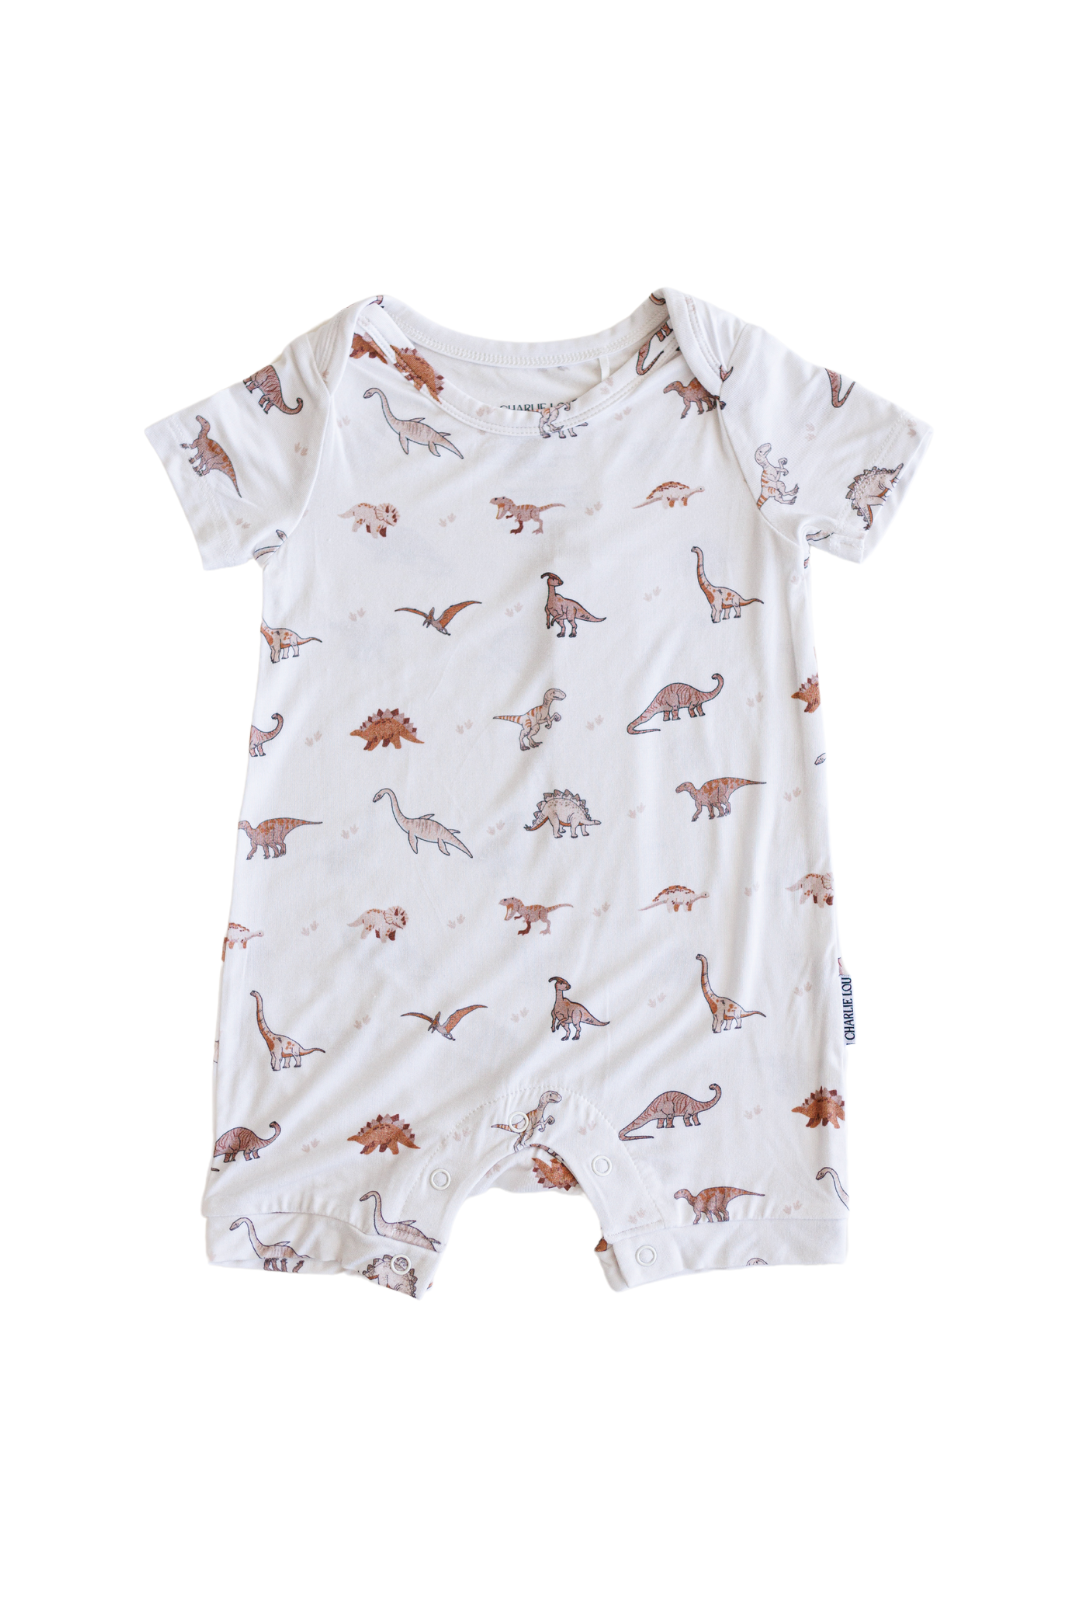 Baby Boy Stripe/Dinosaur Print Short-sleeve Romper